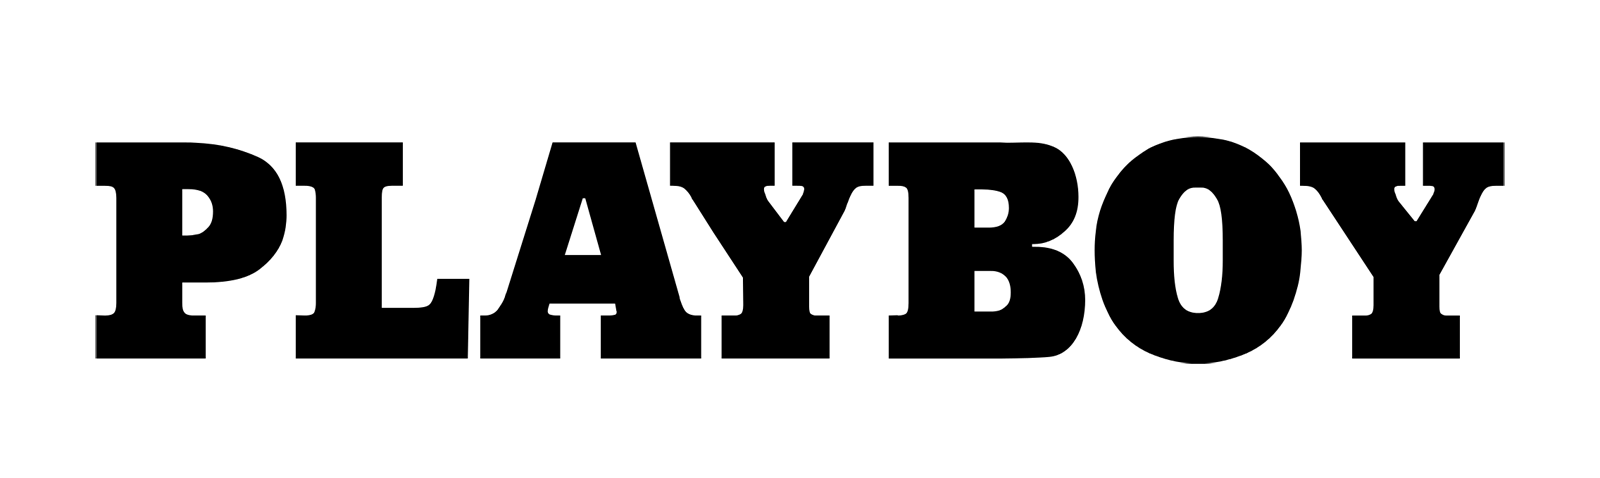 Playboy Logo Transparent Image